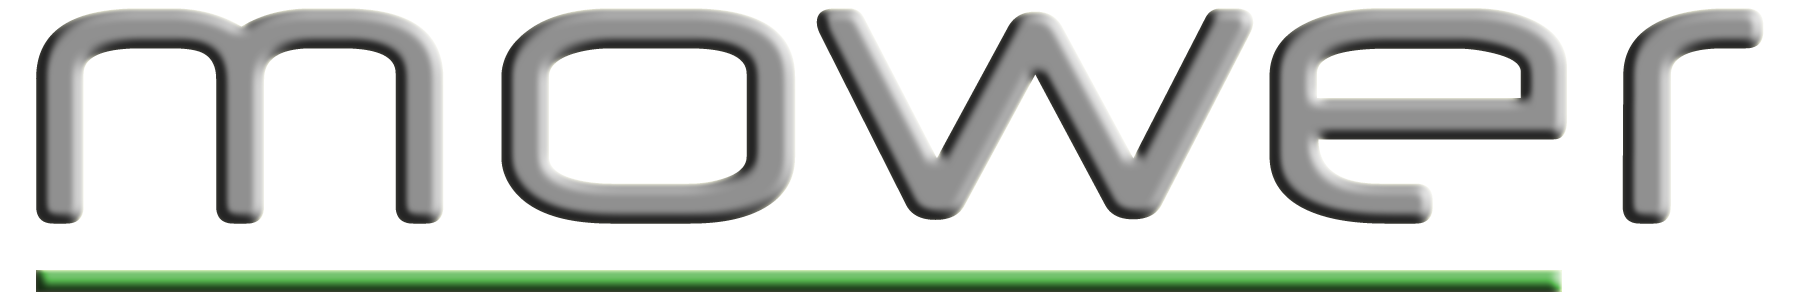 mower-logo